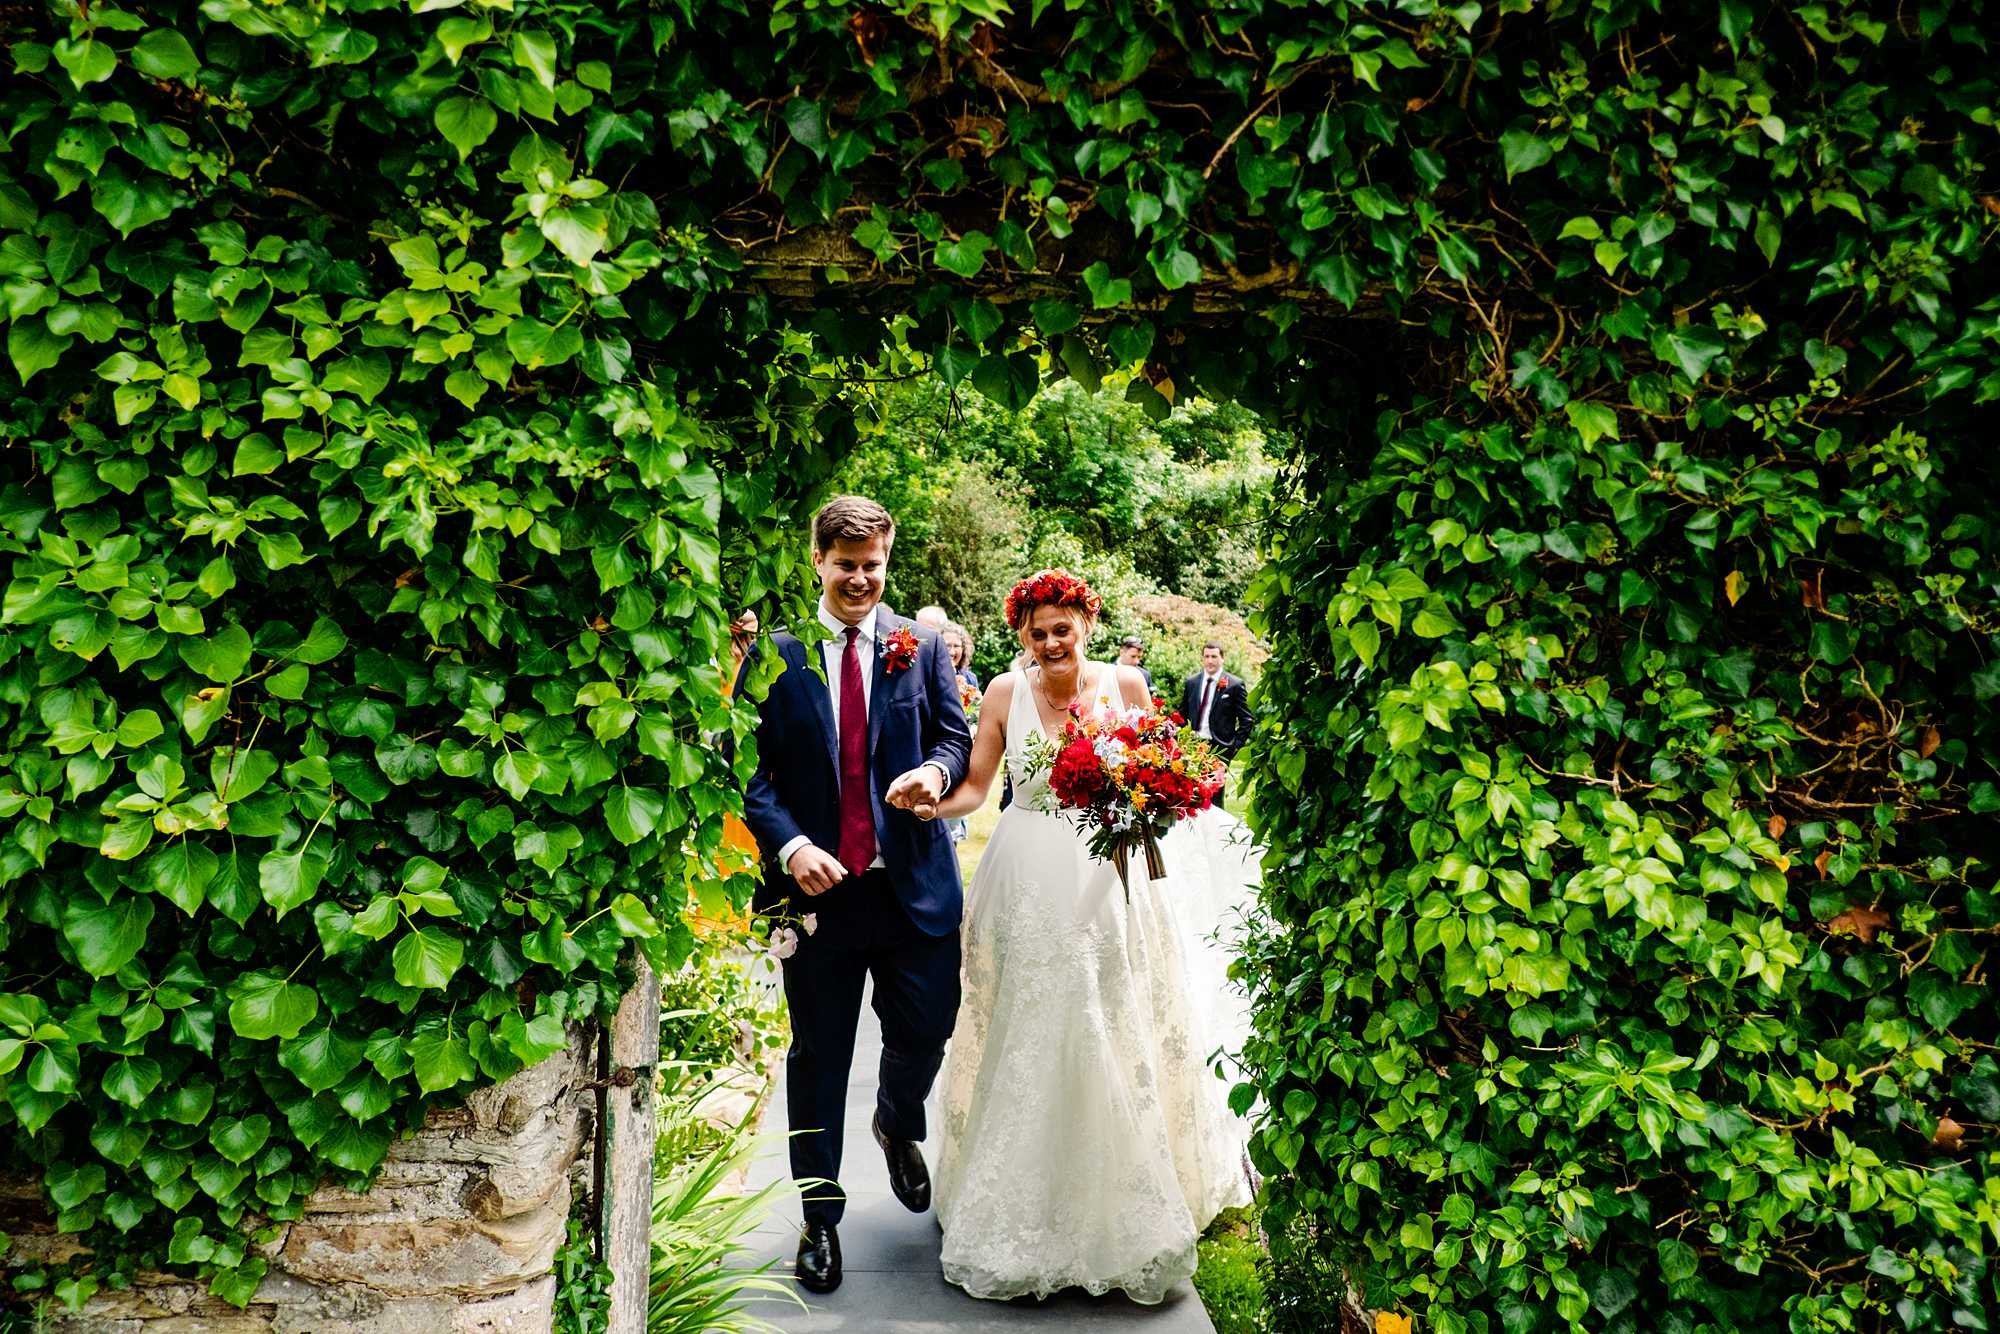 Treseren Cornwall Wedding Photographer-72.jpg